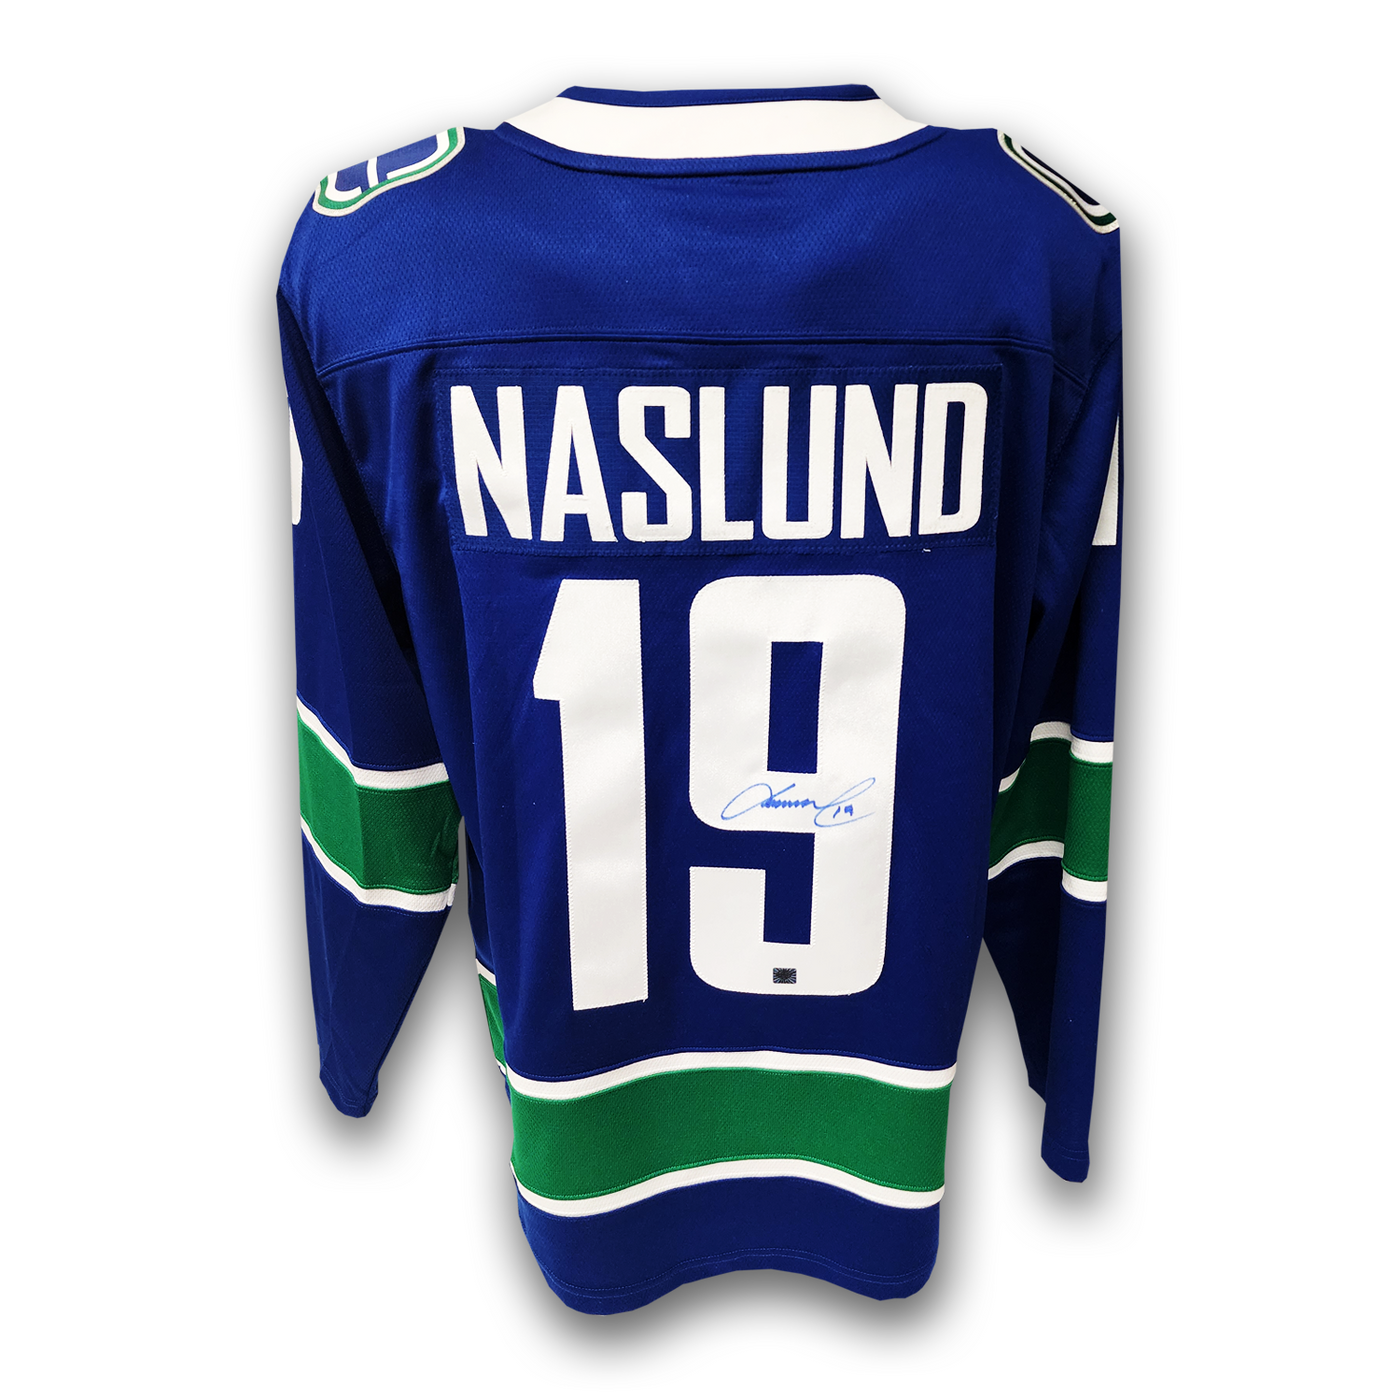 Markus Naslund Vancouver Canucks Autographed Fanatics Jersey